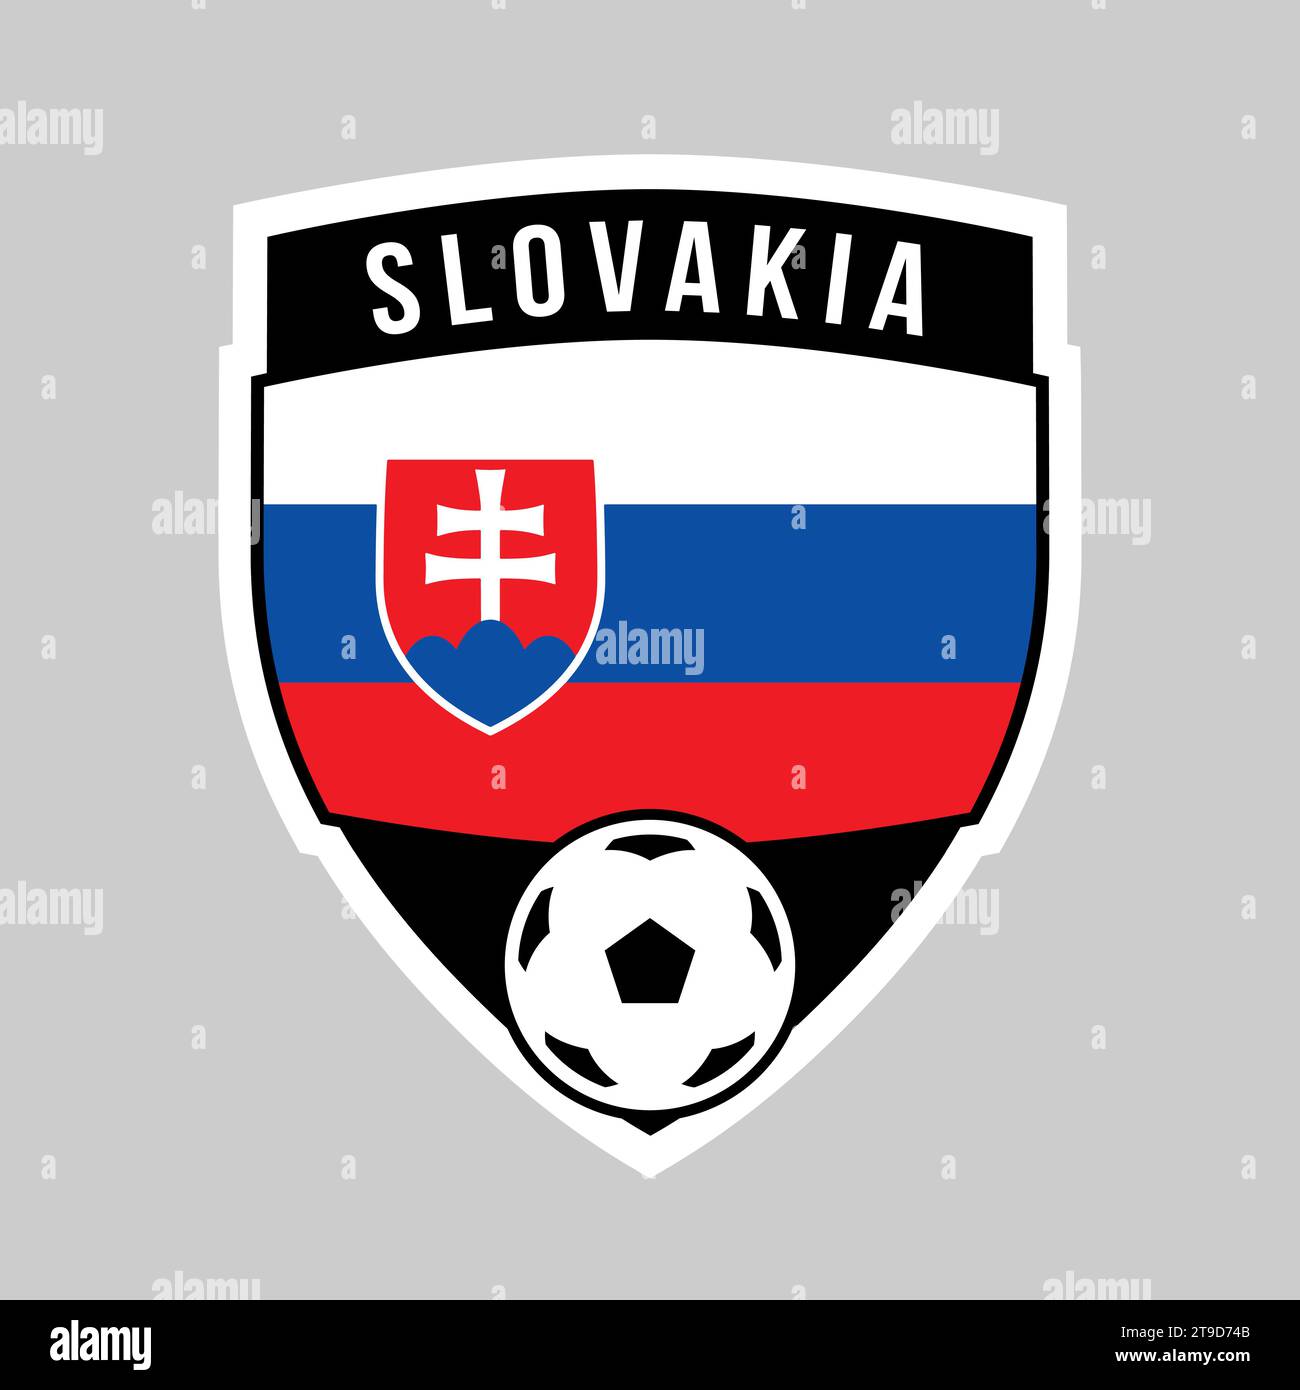 Illustration of Shield Team Badge of Slovakia for Football Tournament Stock Vector